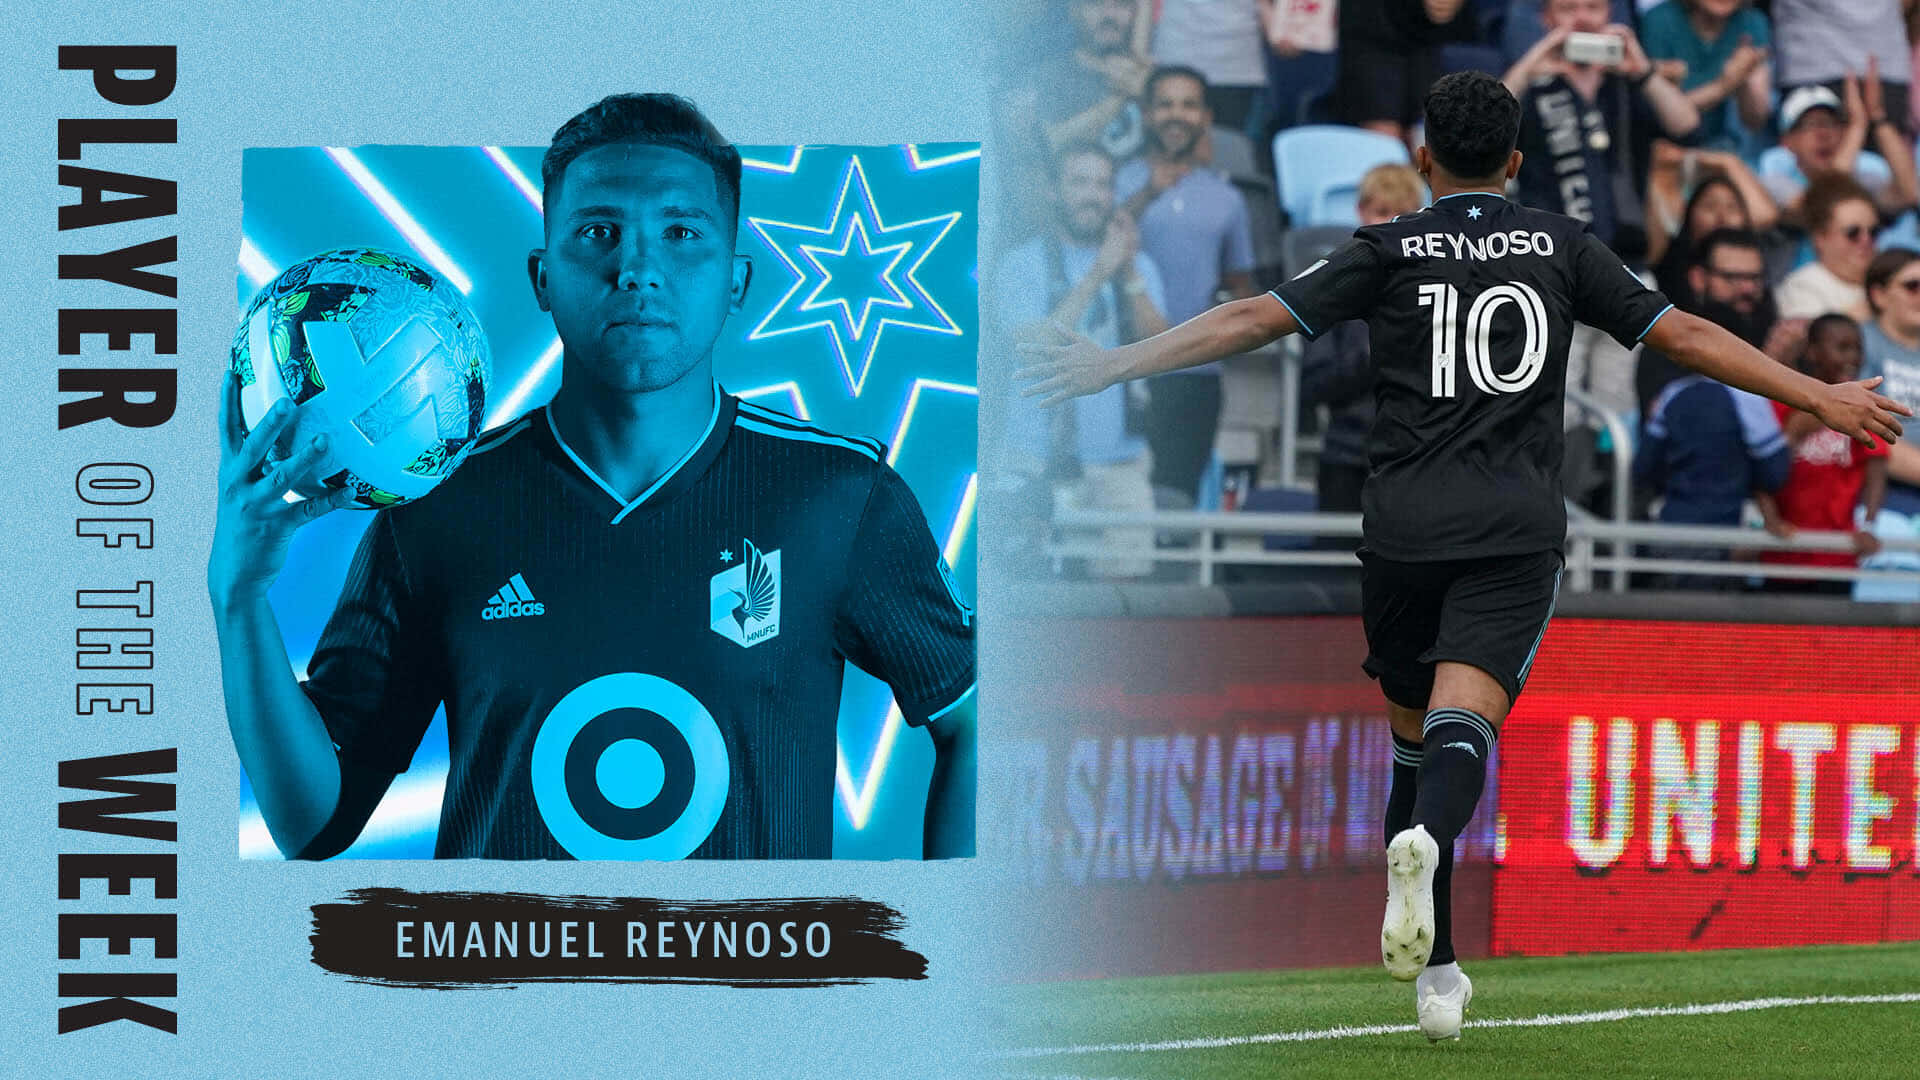 Emanuel Reynoso Player Of The Week Minnesota United FC Wallpaper